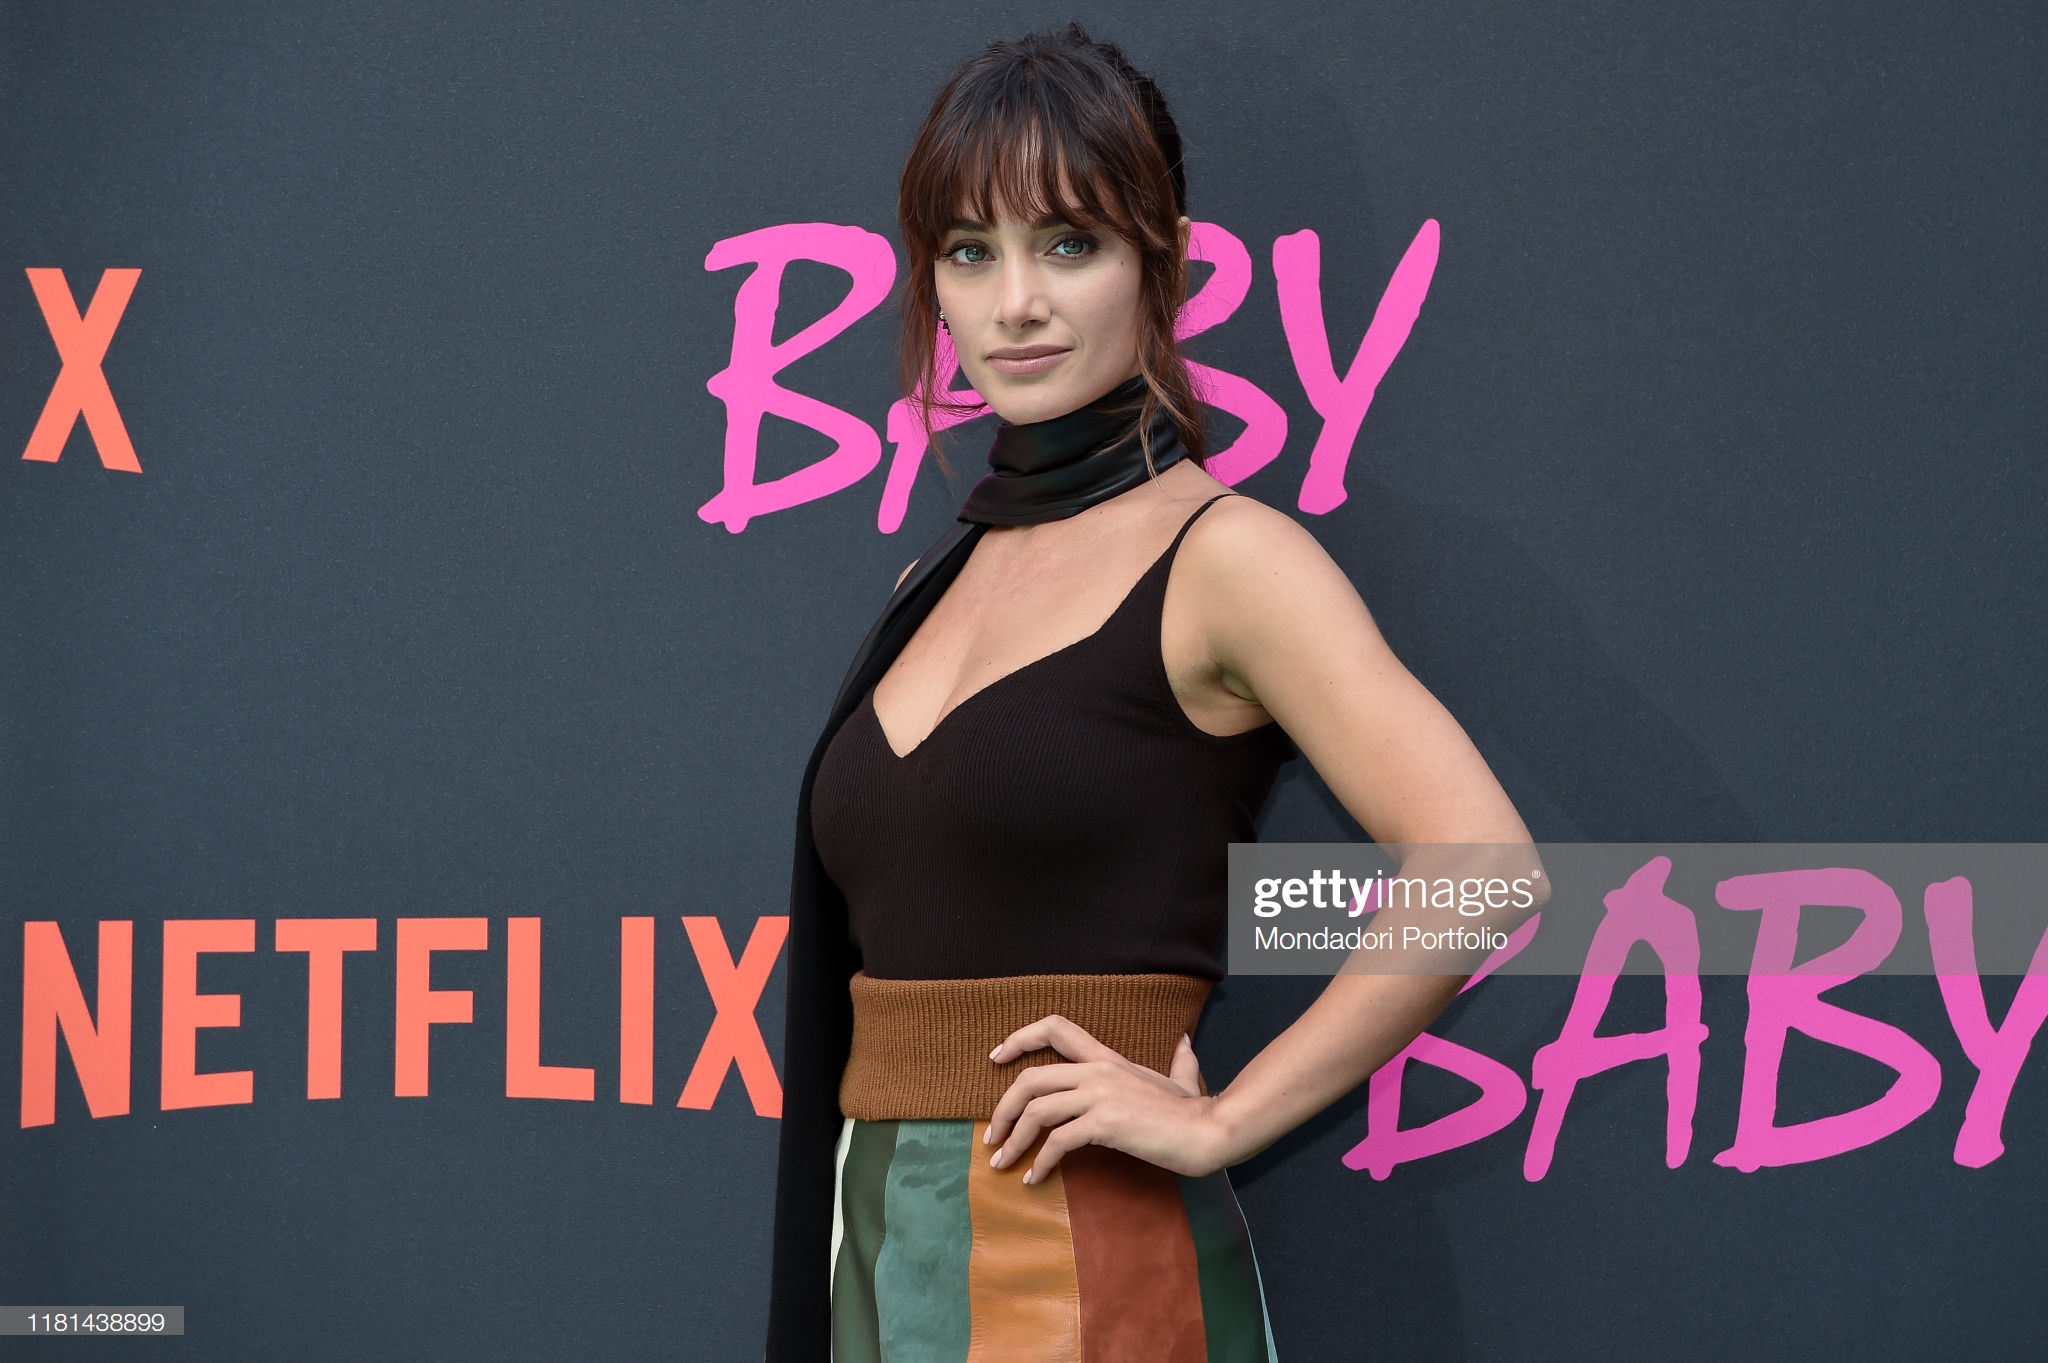 BABY 2 Anteprima Preview Denise Capezza attrice netflix natalia getty images red carpet presentazione cast